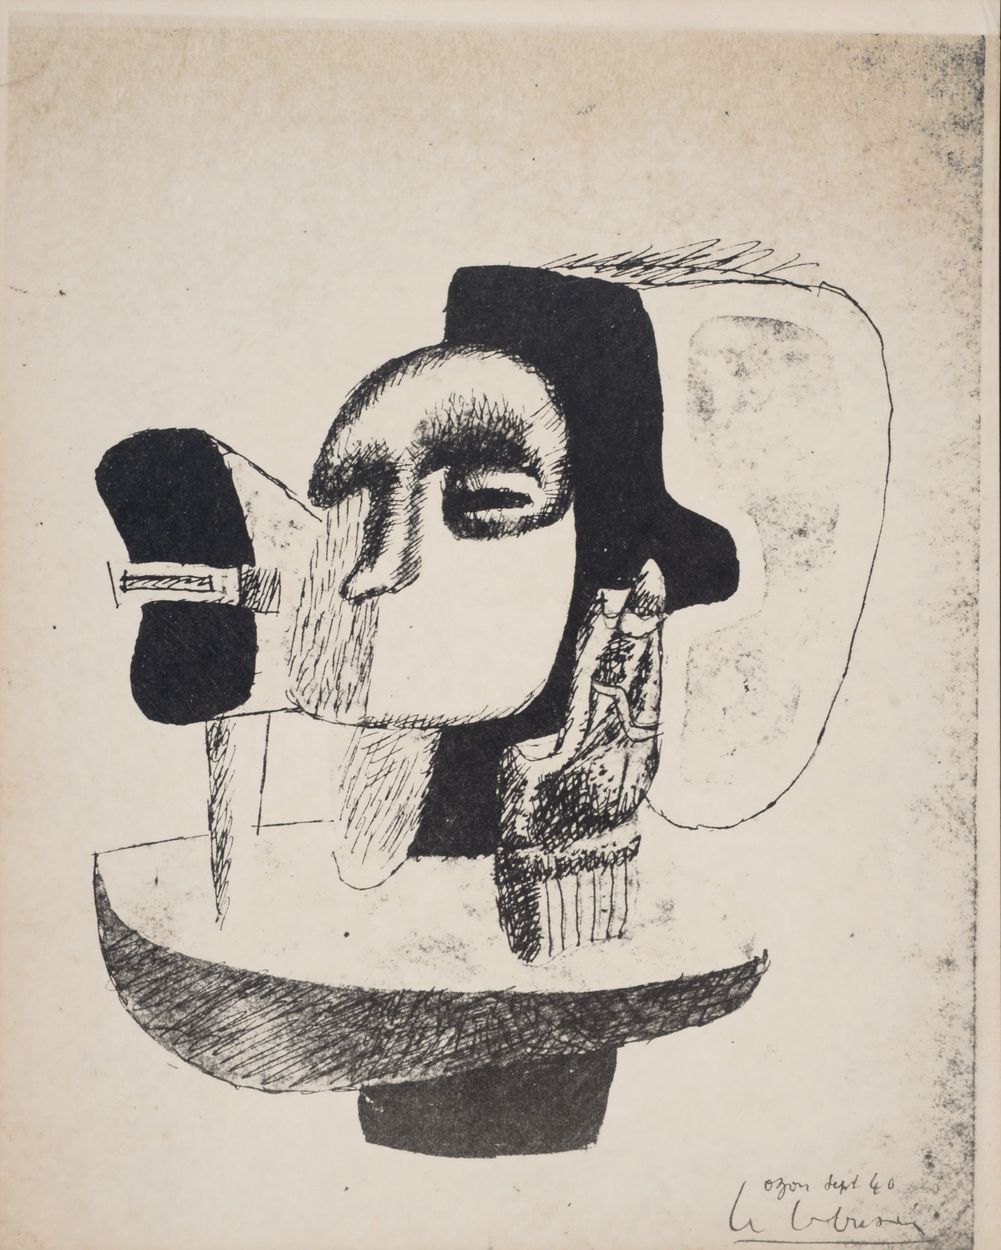 Le Corbusier 夏尔-爱德华-让纳雷 (1887-1965)

奥松，1940年

纸张上的Xerography

Ozon "的首次单次试验证明 (&hellip;